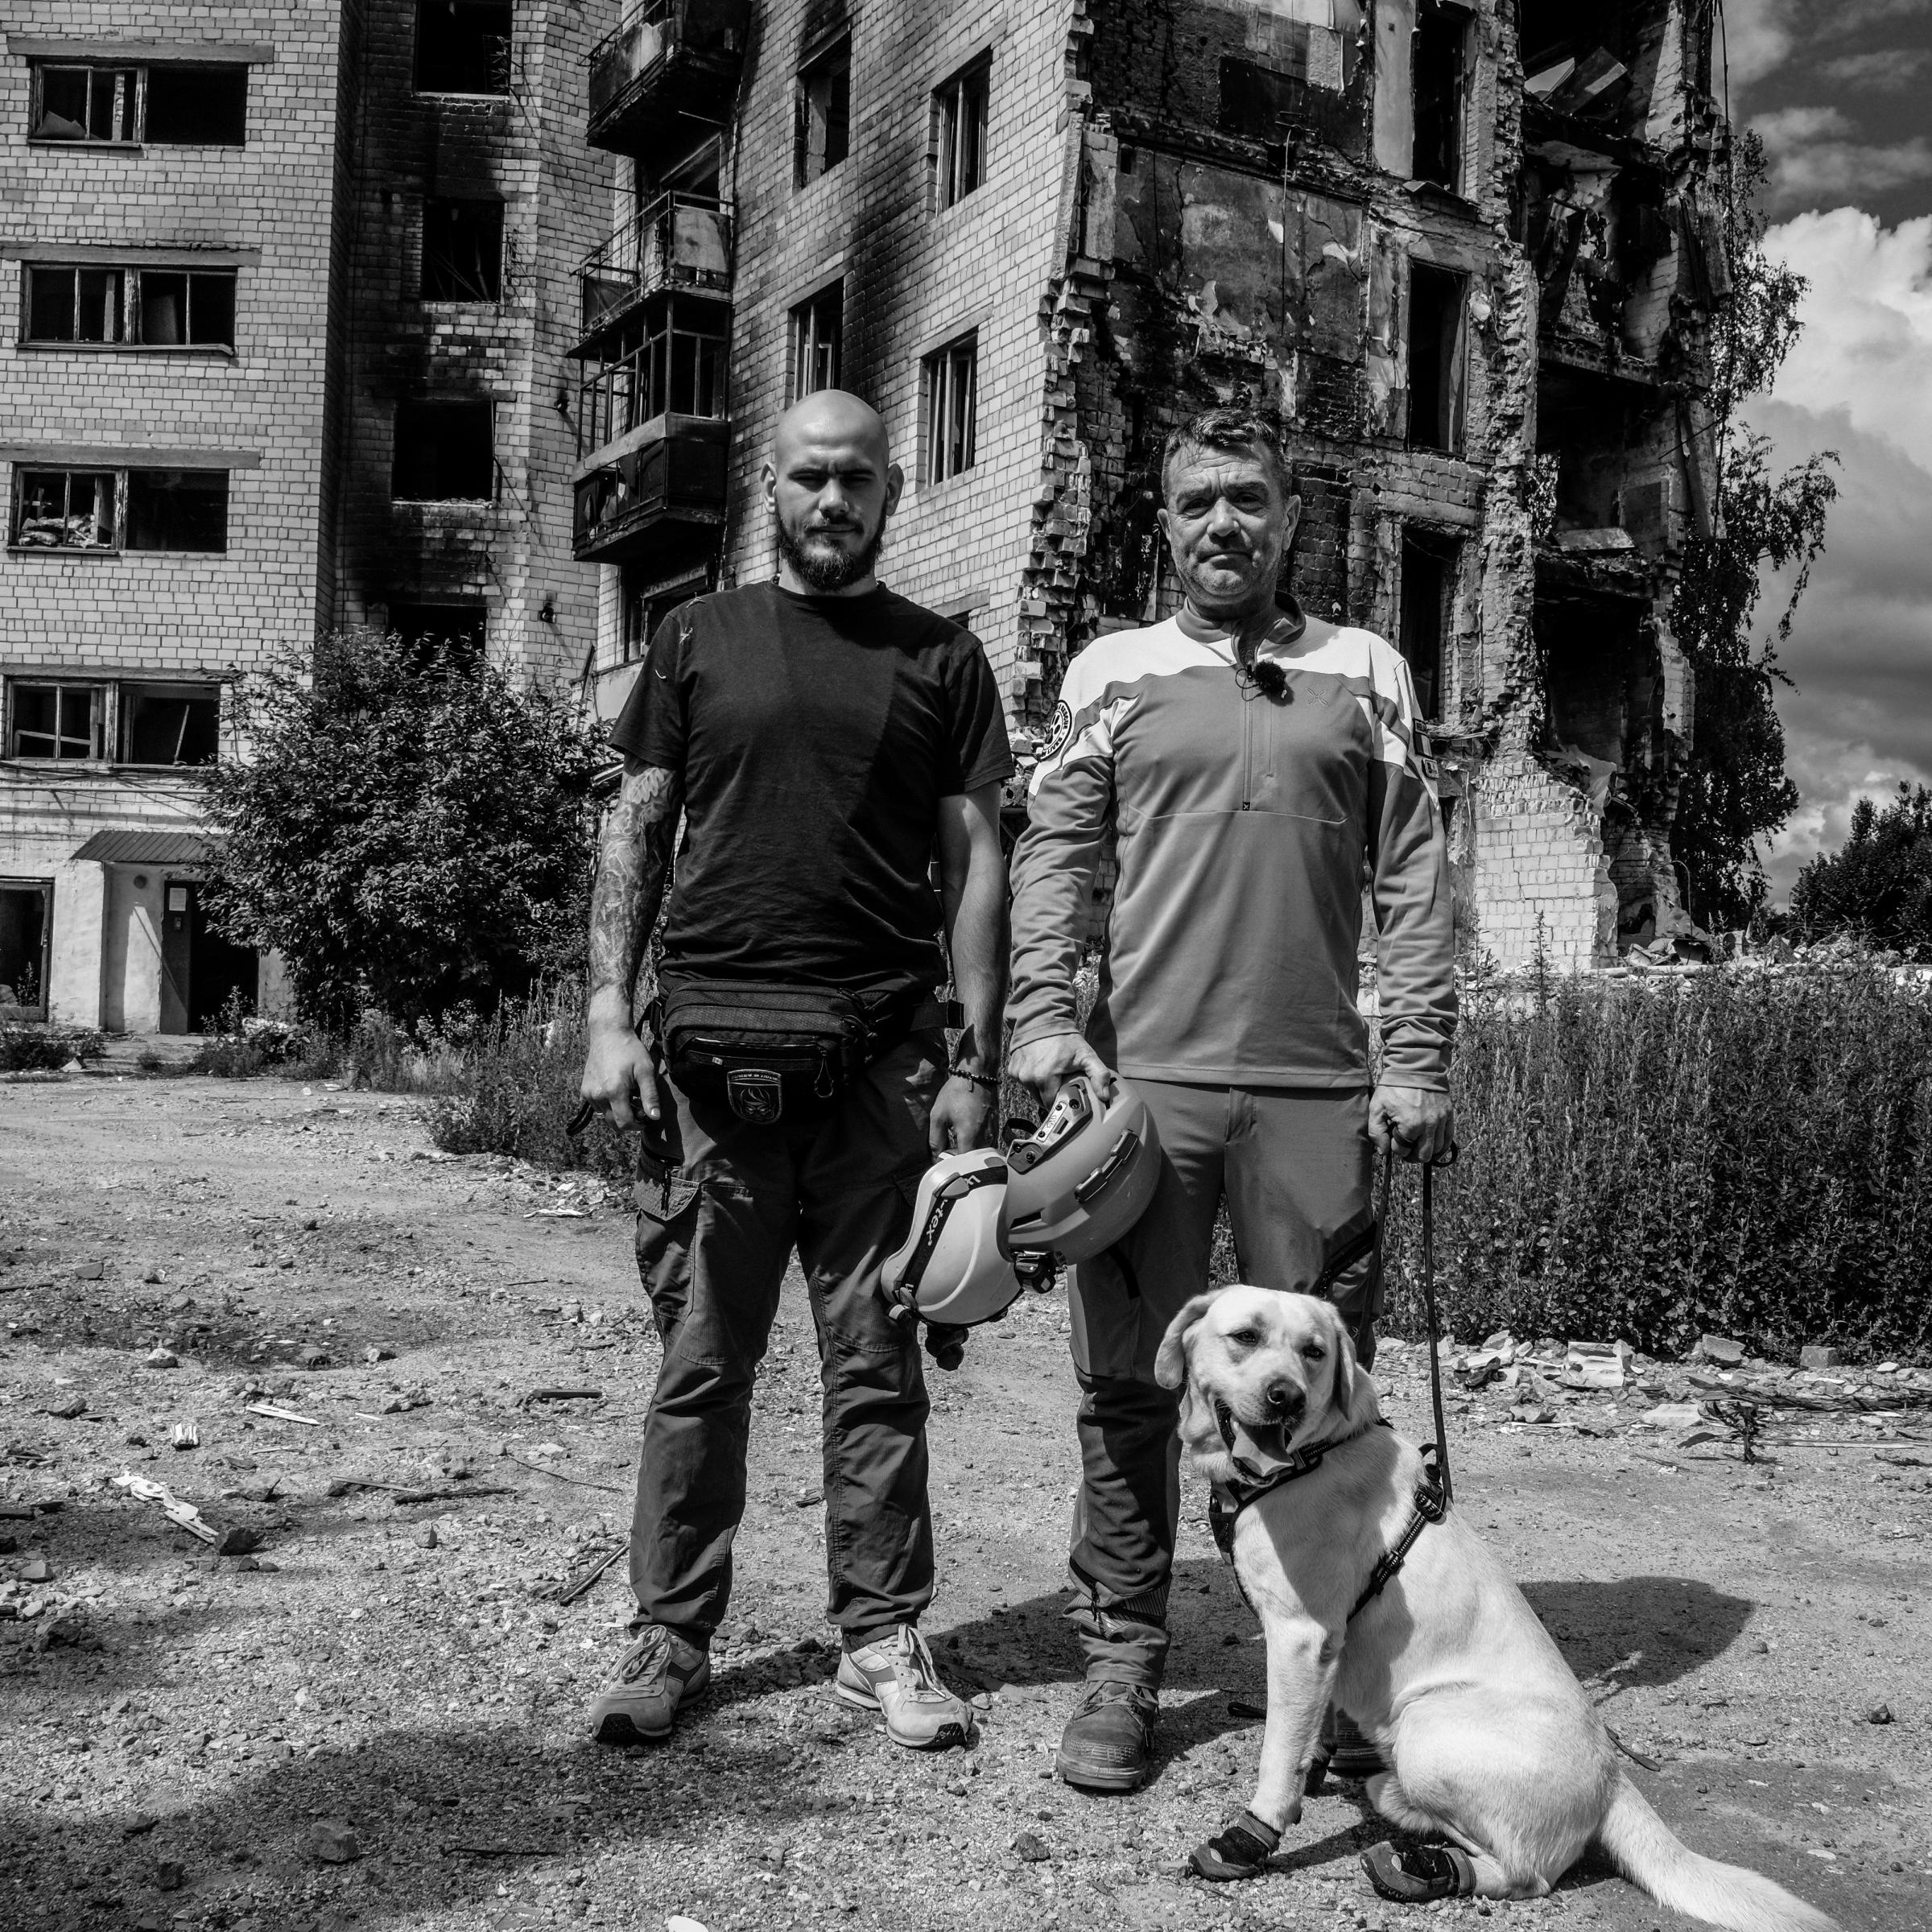 One man and his dog saving lives in Ukraine, by David Pratt